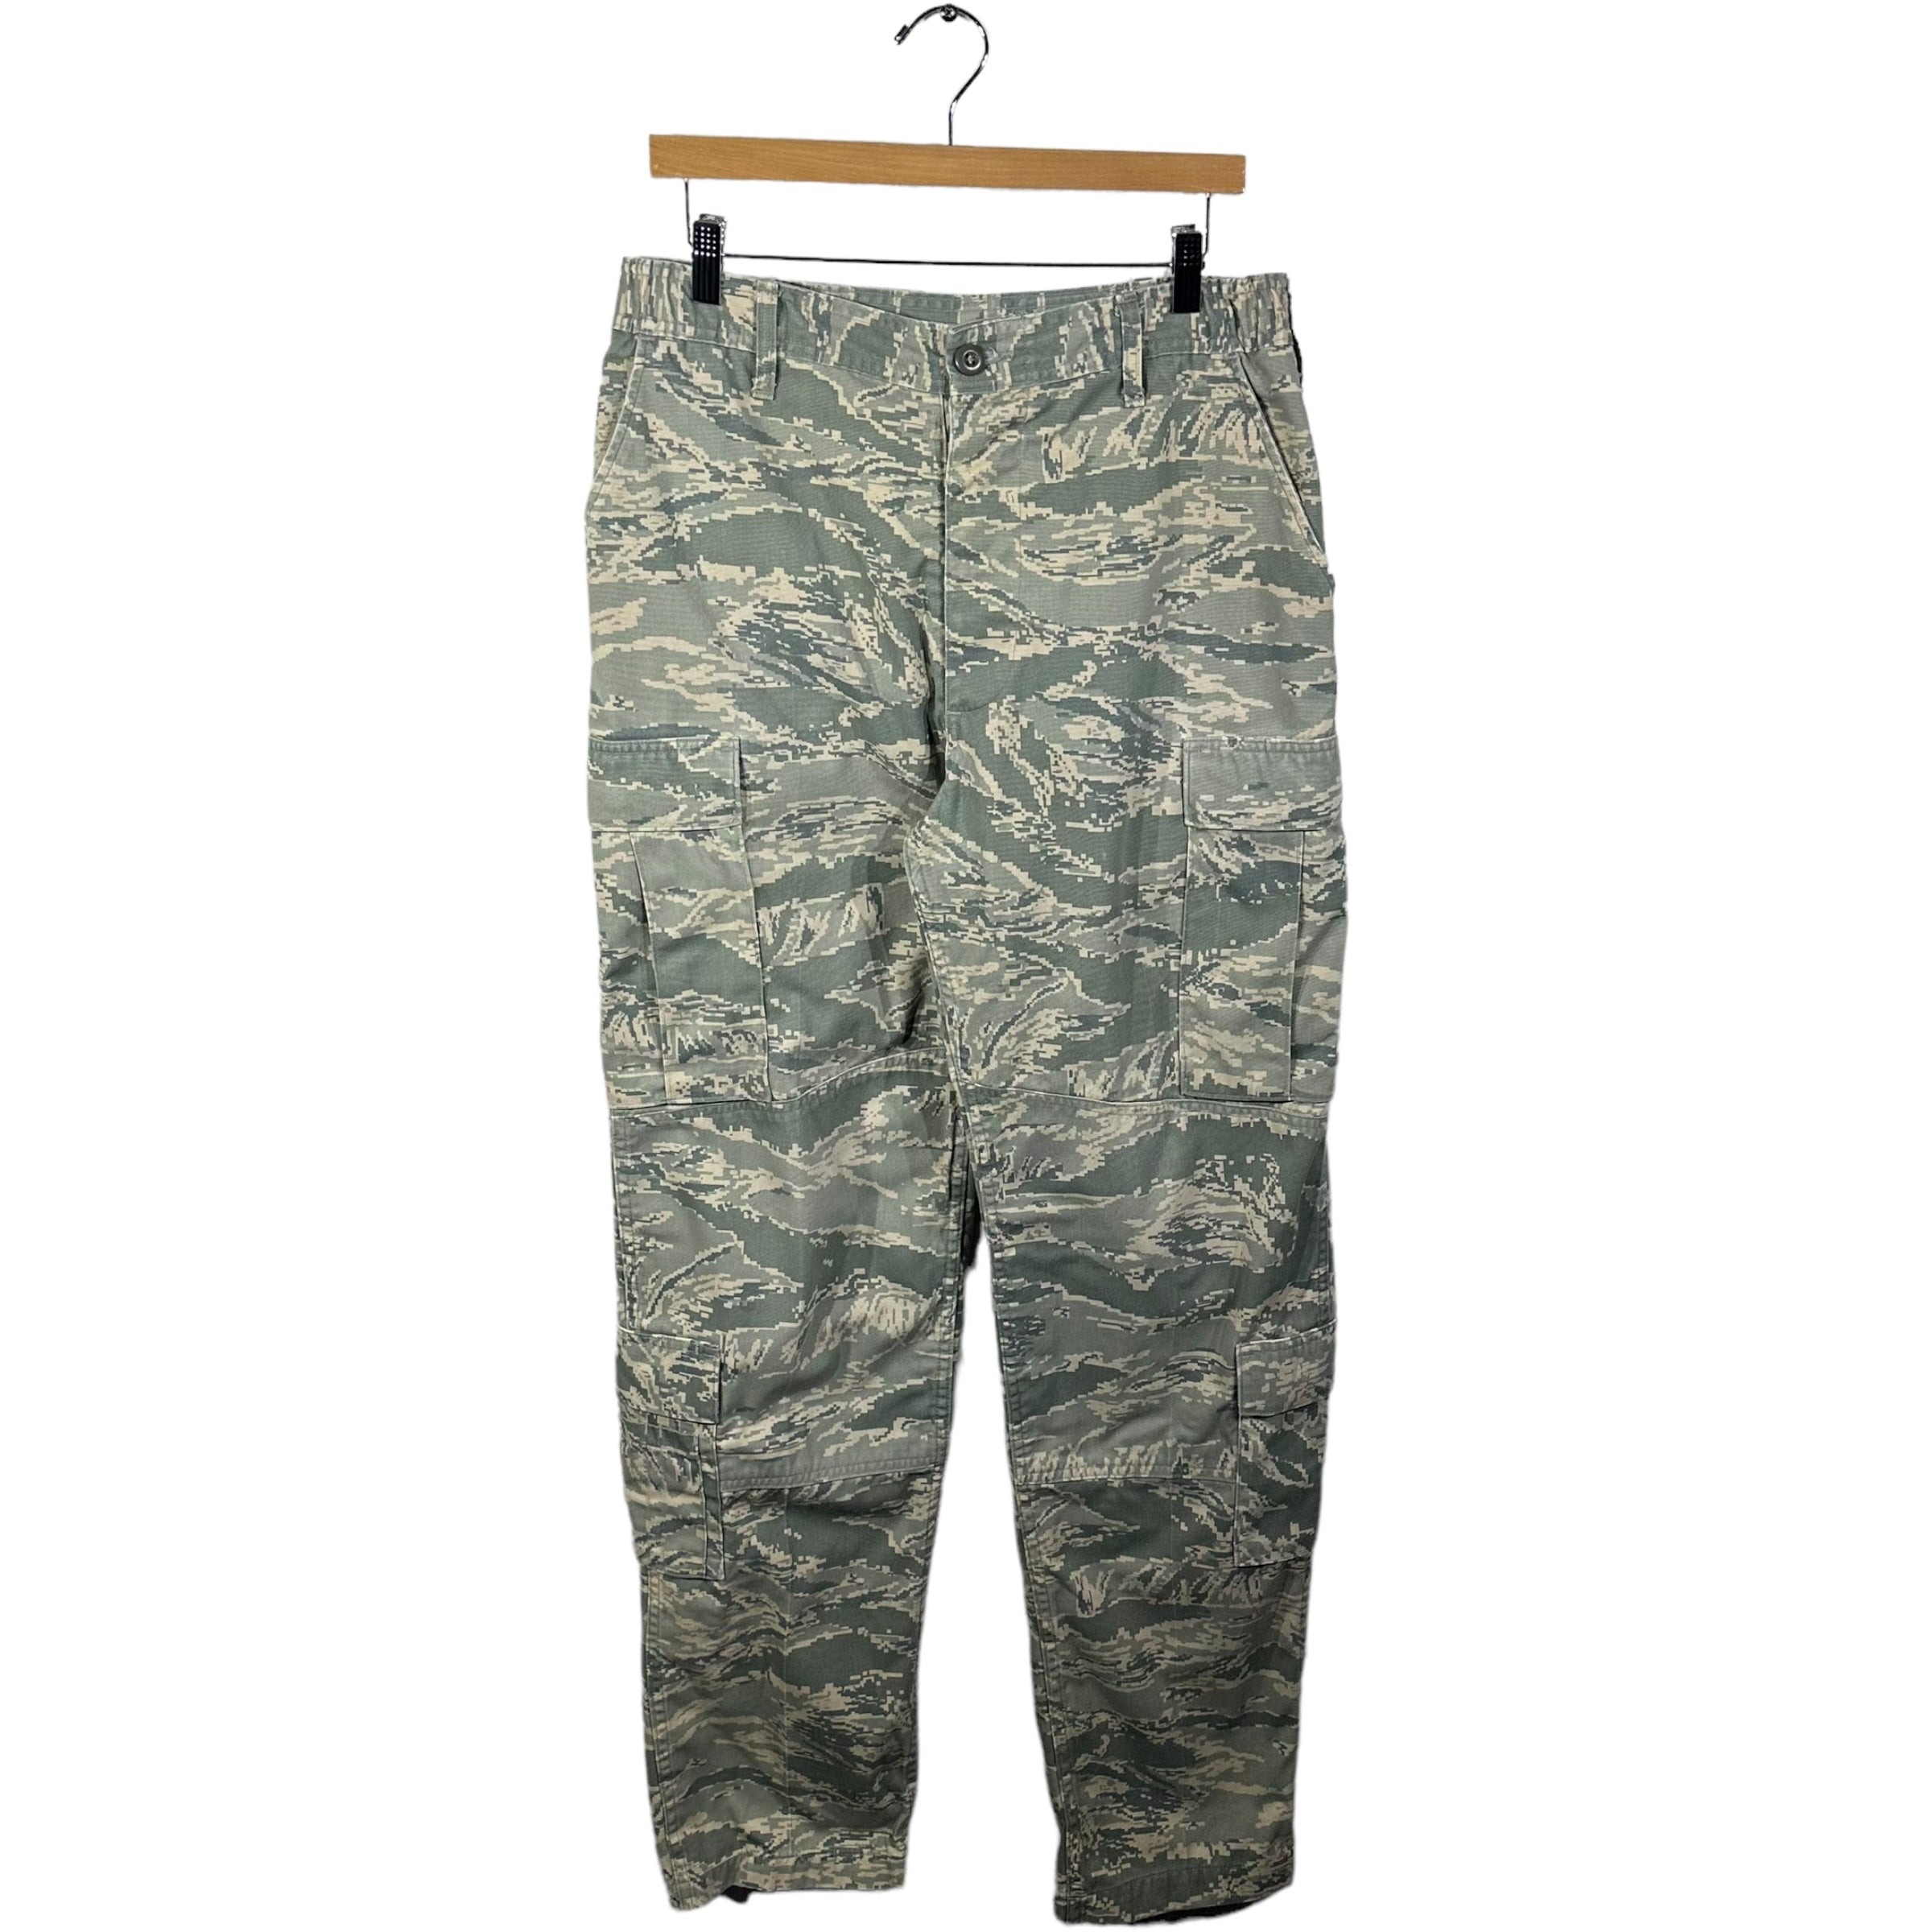 Vintage Military Cargo Camo Pants